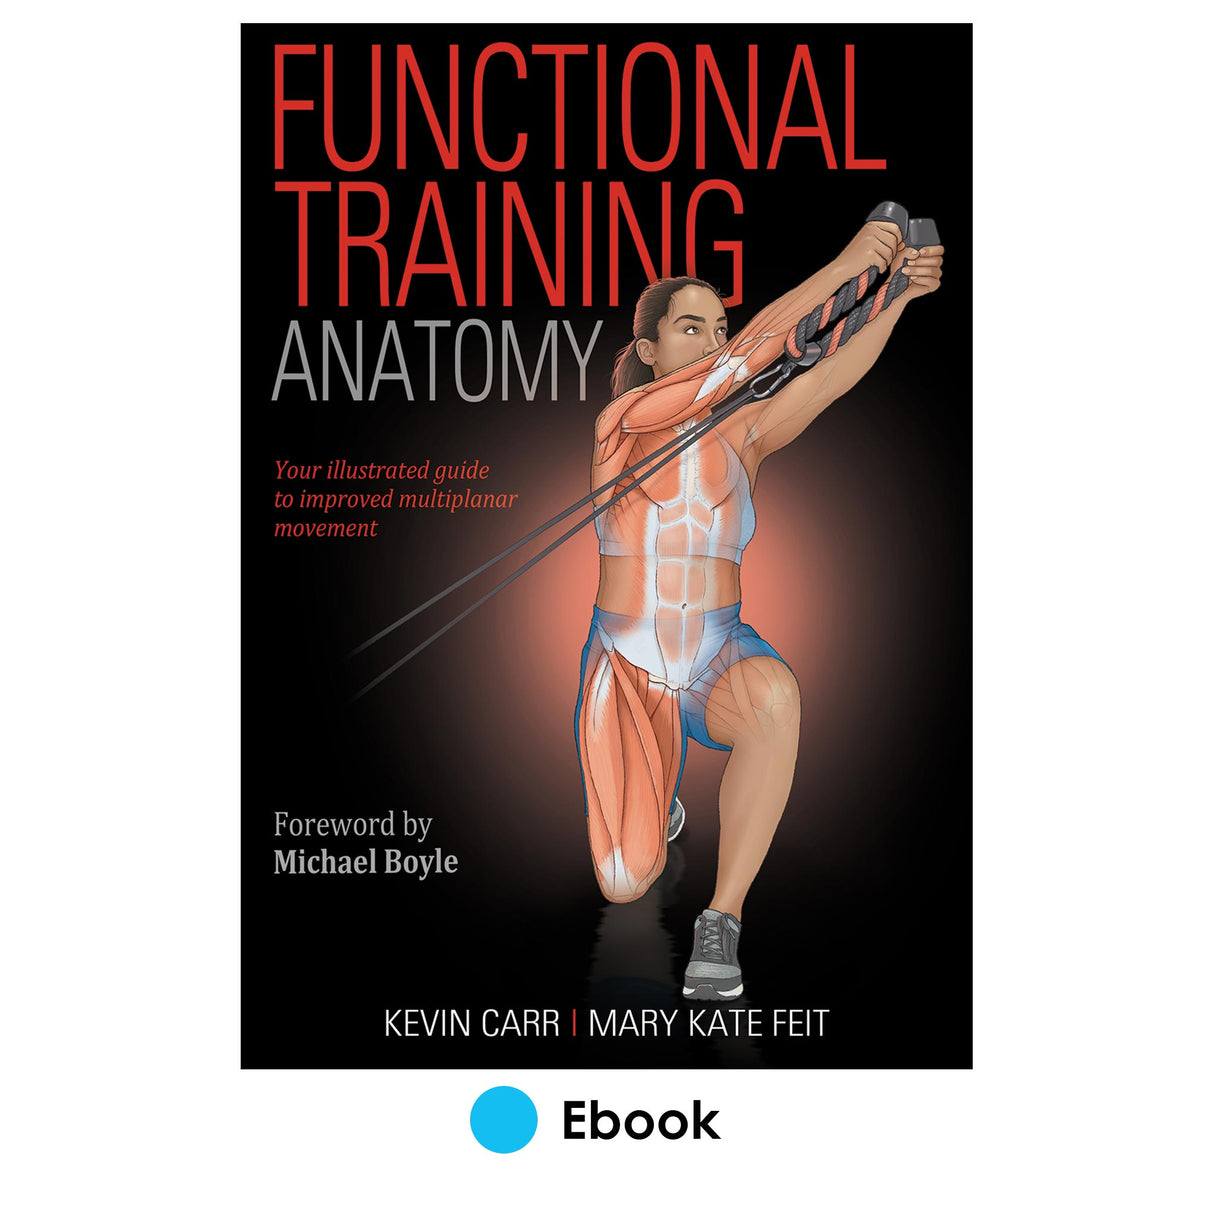 Functional Training Anatomy epub